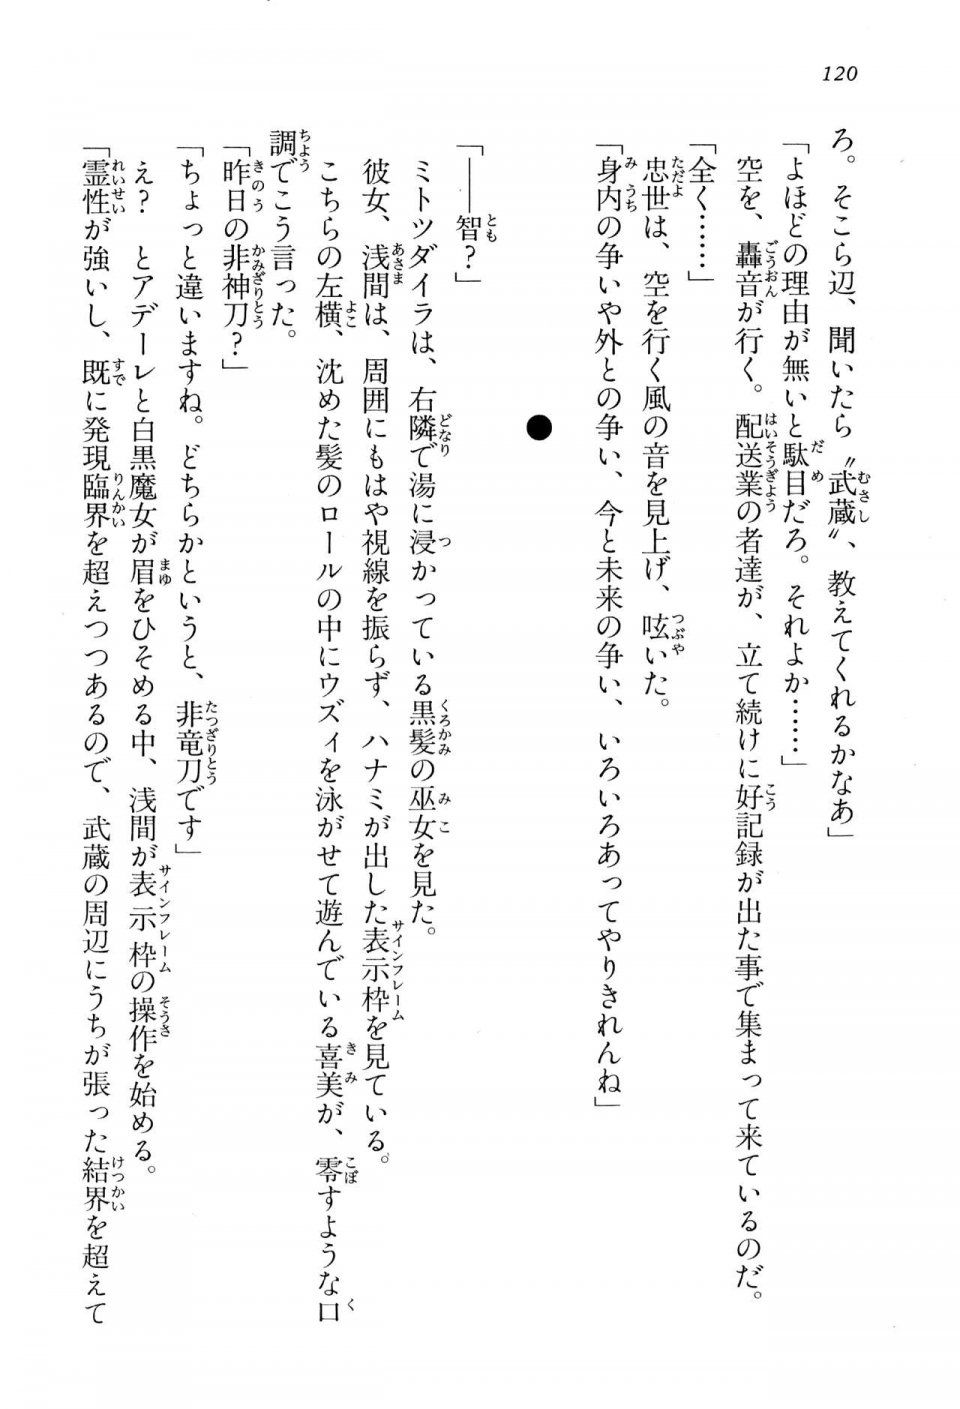 Kyoukai Senjou no Horizon BD Special Mininovel Vol 3(2A) - Photo #124